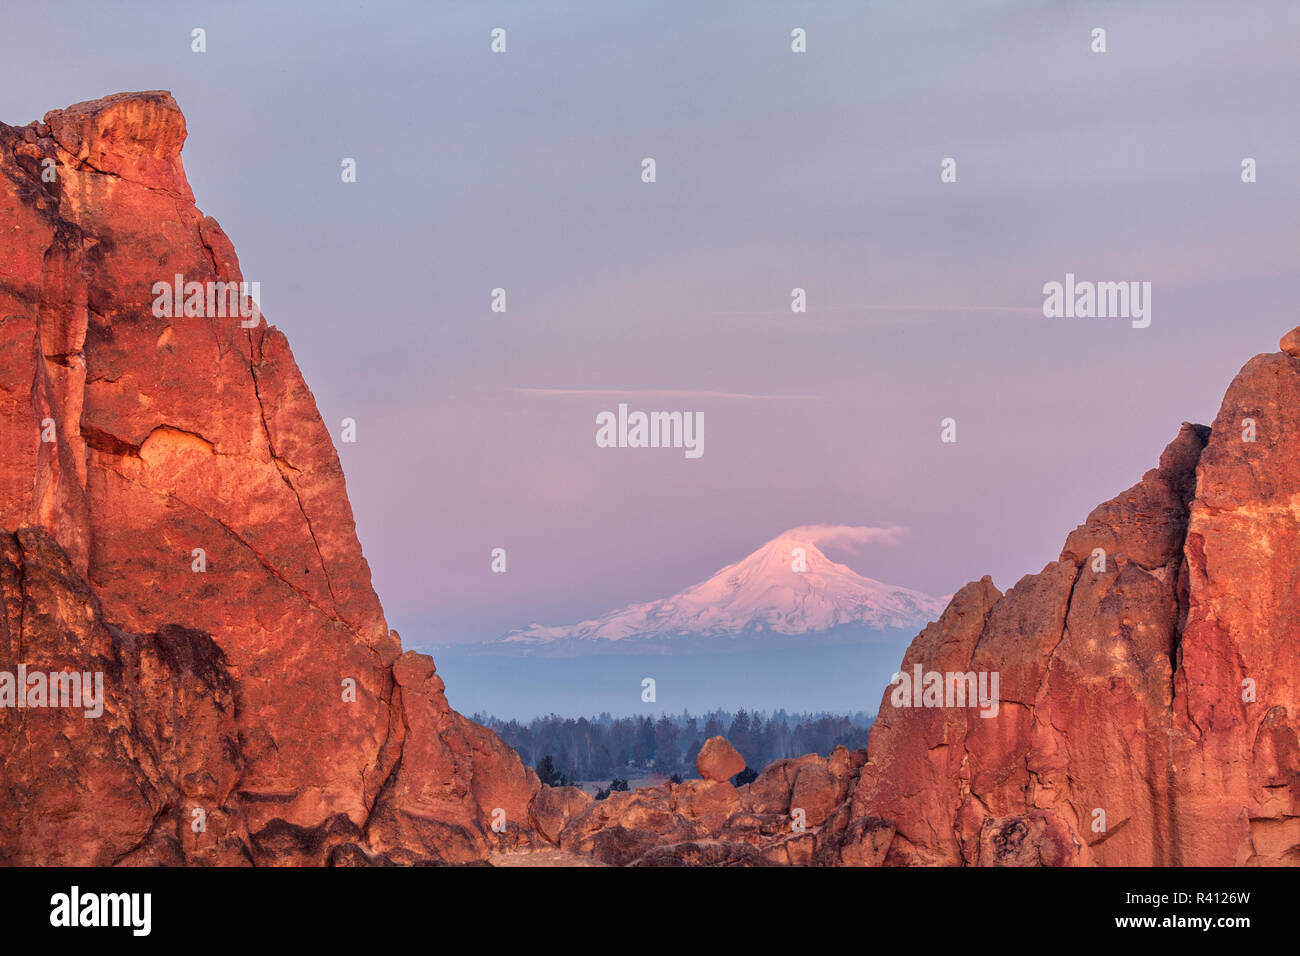 Mt. Jefferson viewed at sunrise through Asterisk Pass, Smith Rock State Park, Oregon Stock Photo